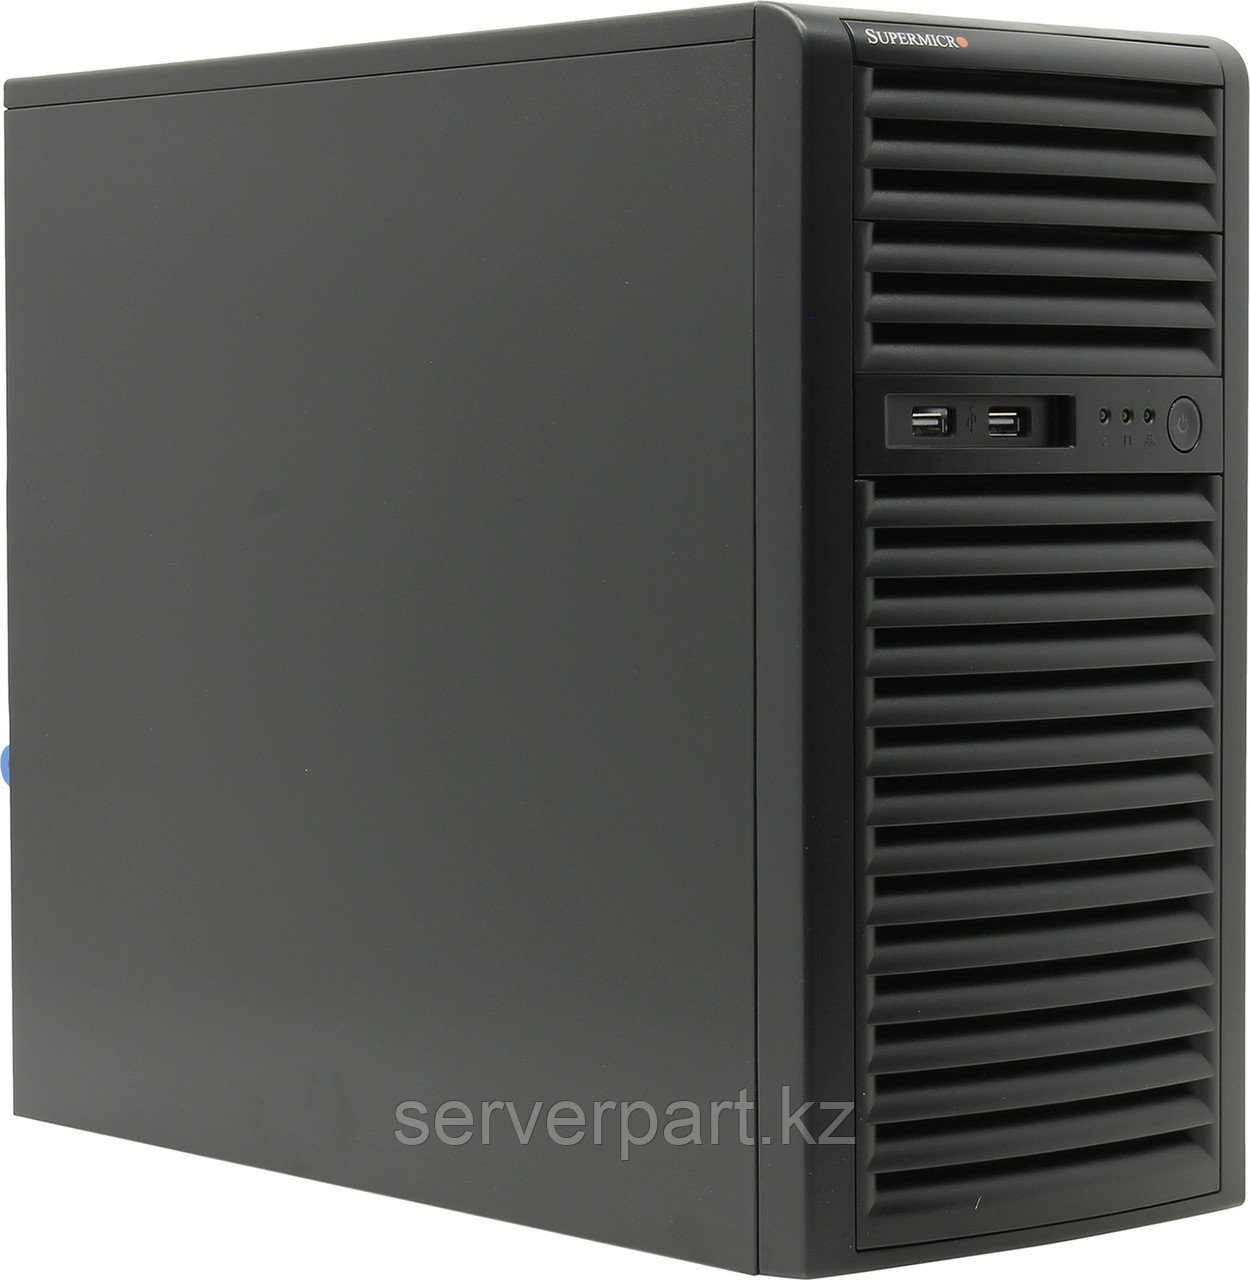 Сервер Supermicro SYS-5039C Tower 4LFF/4-core intel xeon E2124 3.3GHz/32GB UDIMM nECC/no HDD up-to 4, фото 1